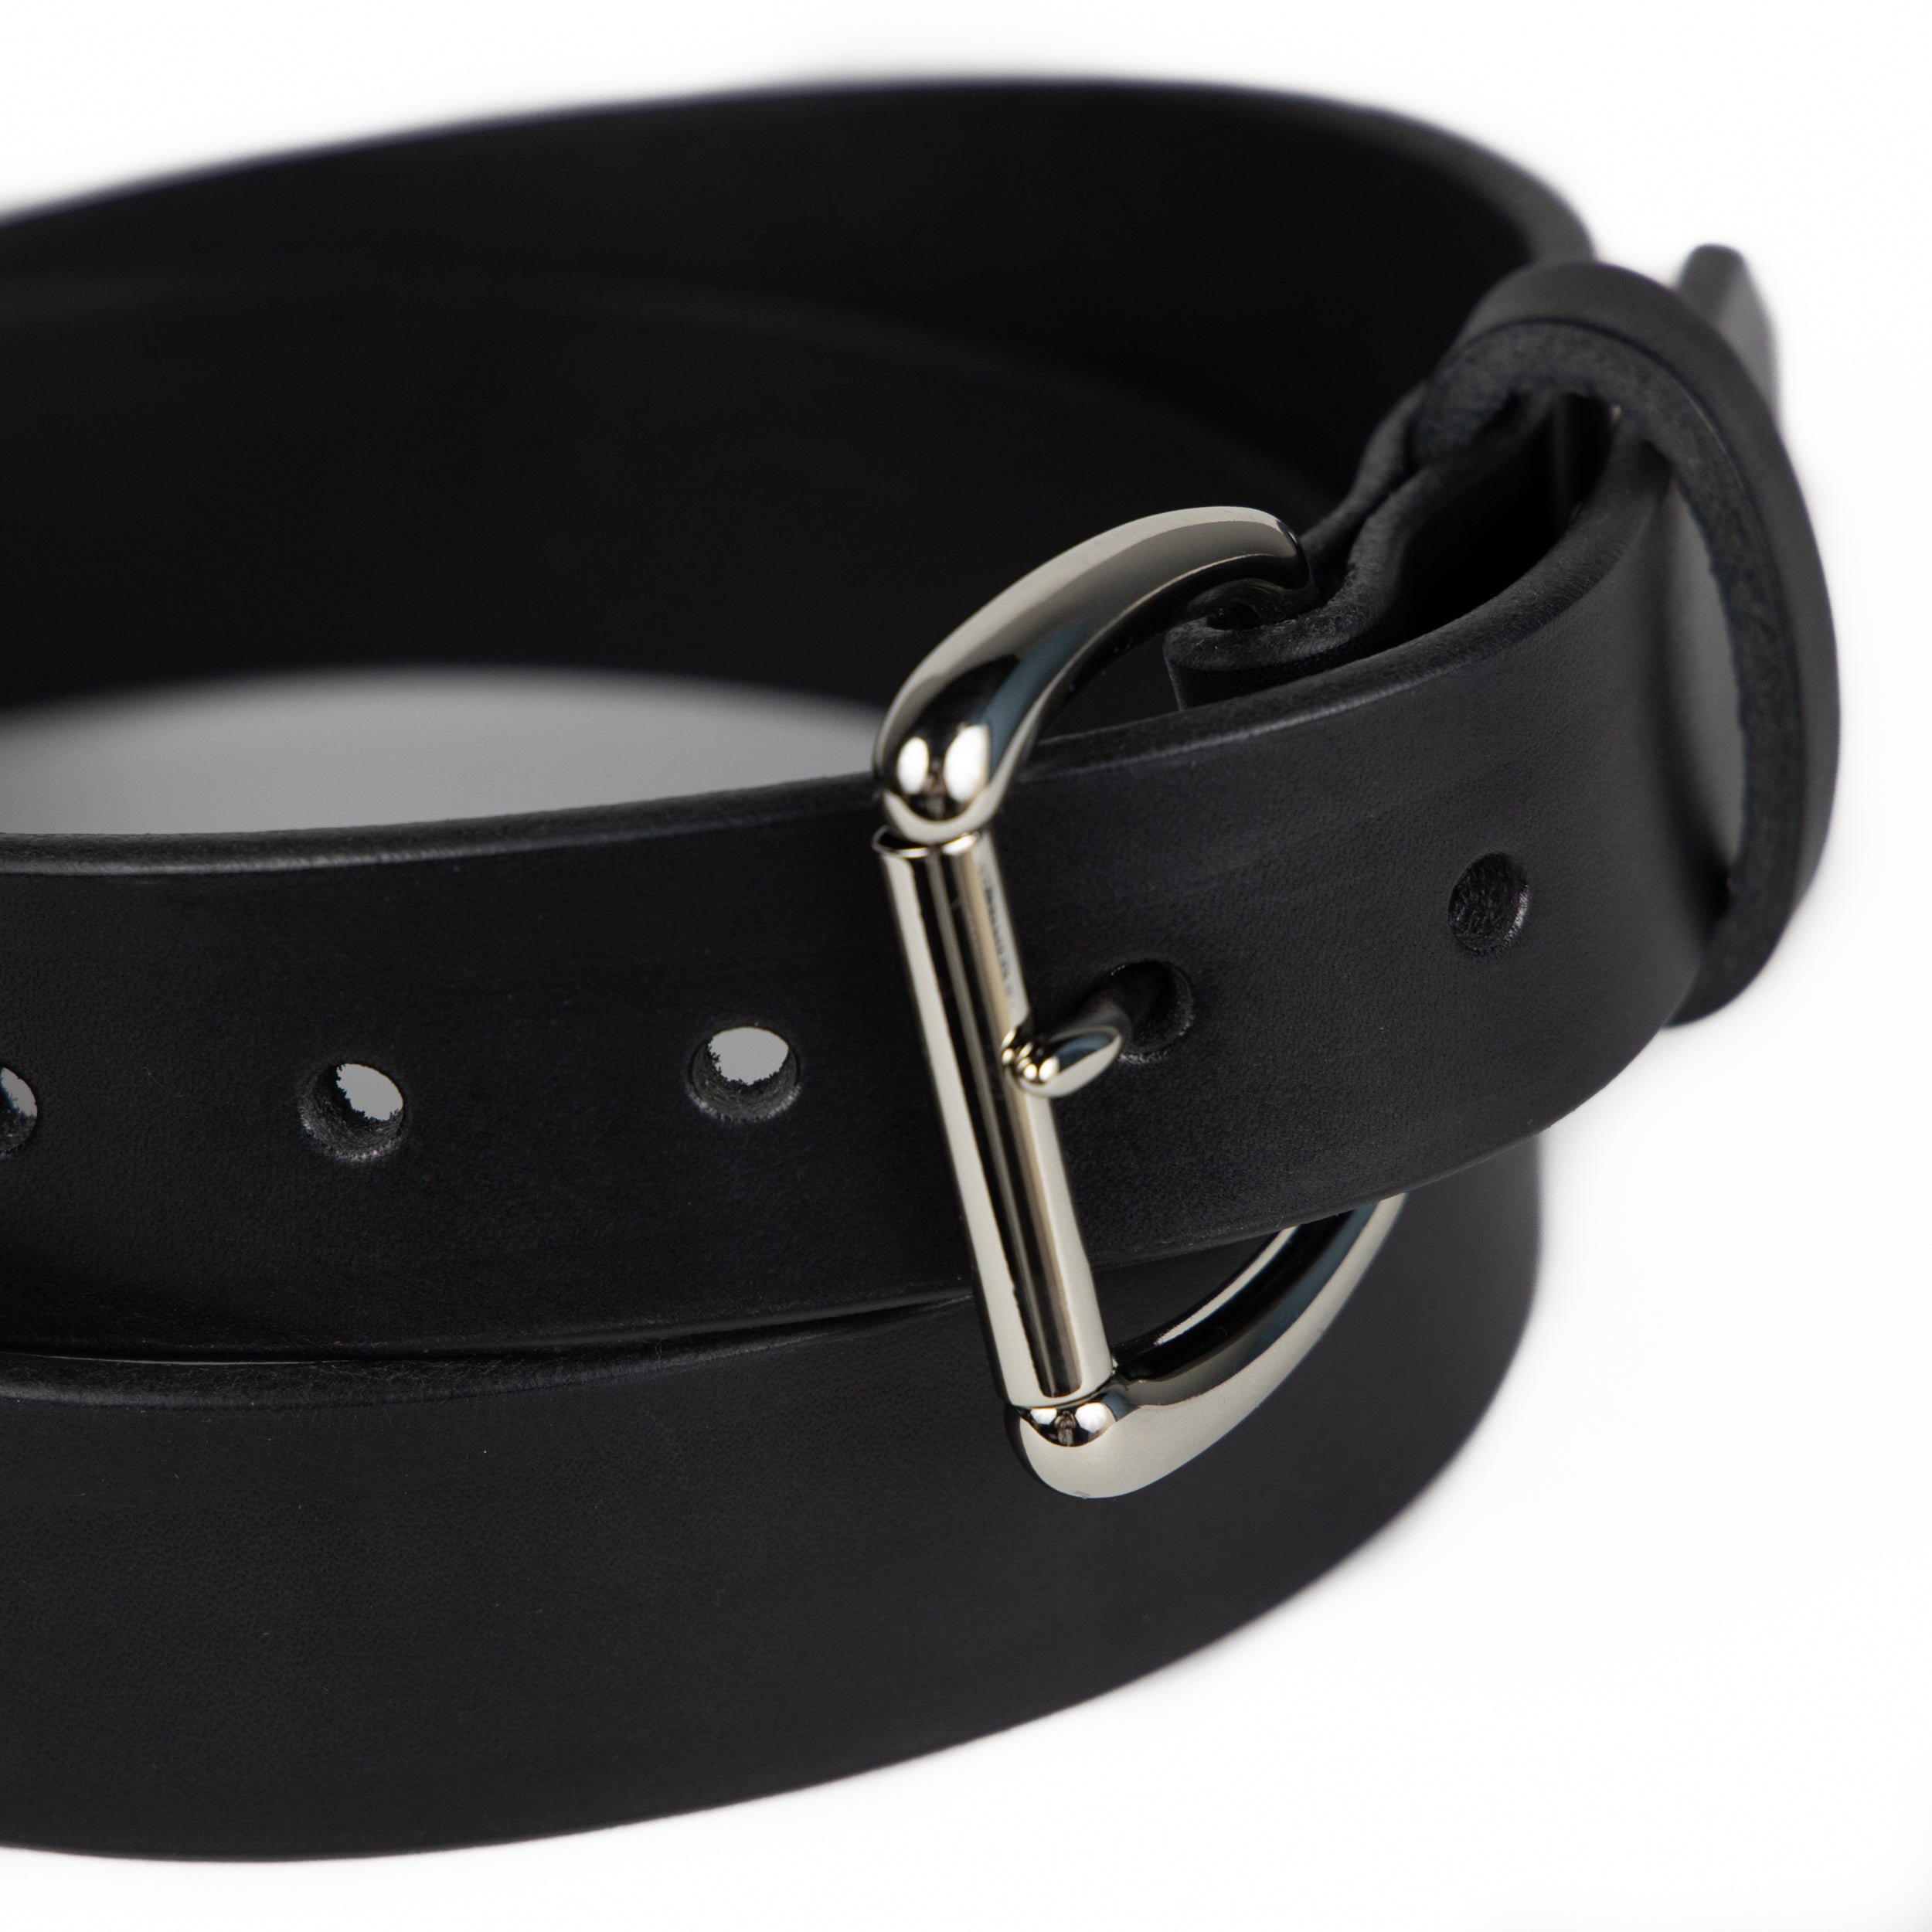 Handmade Genuine Leather Belt